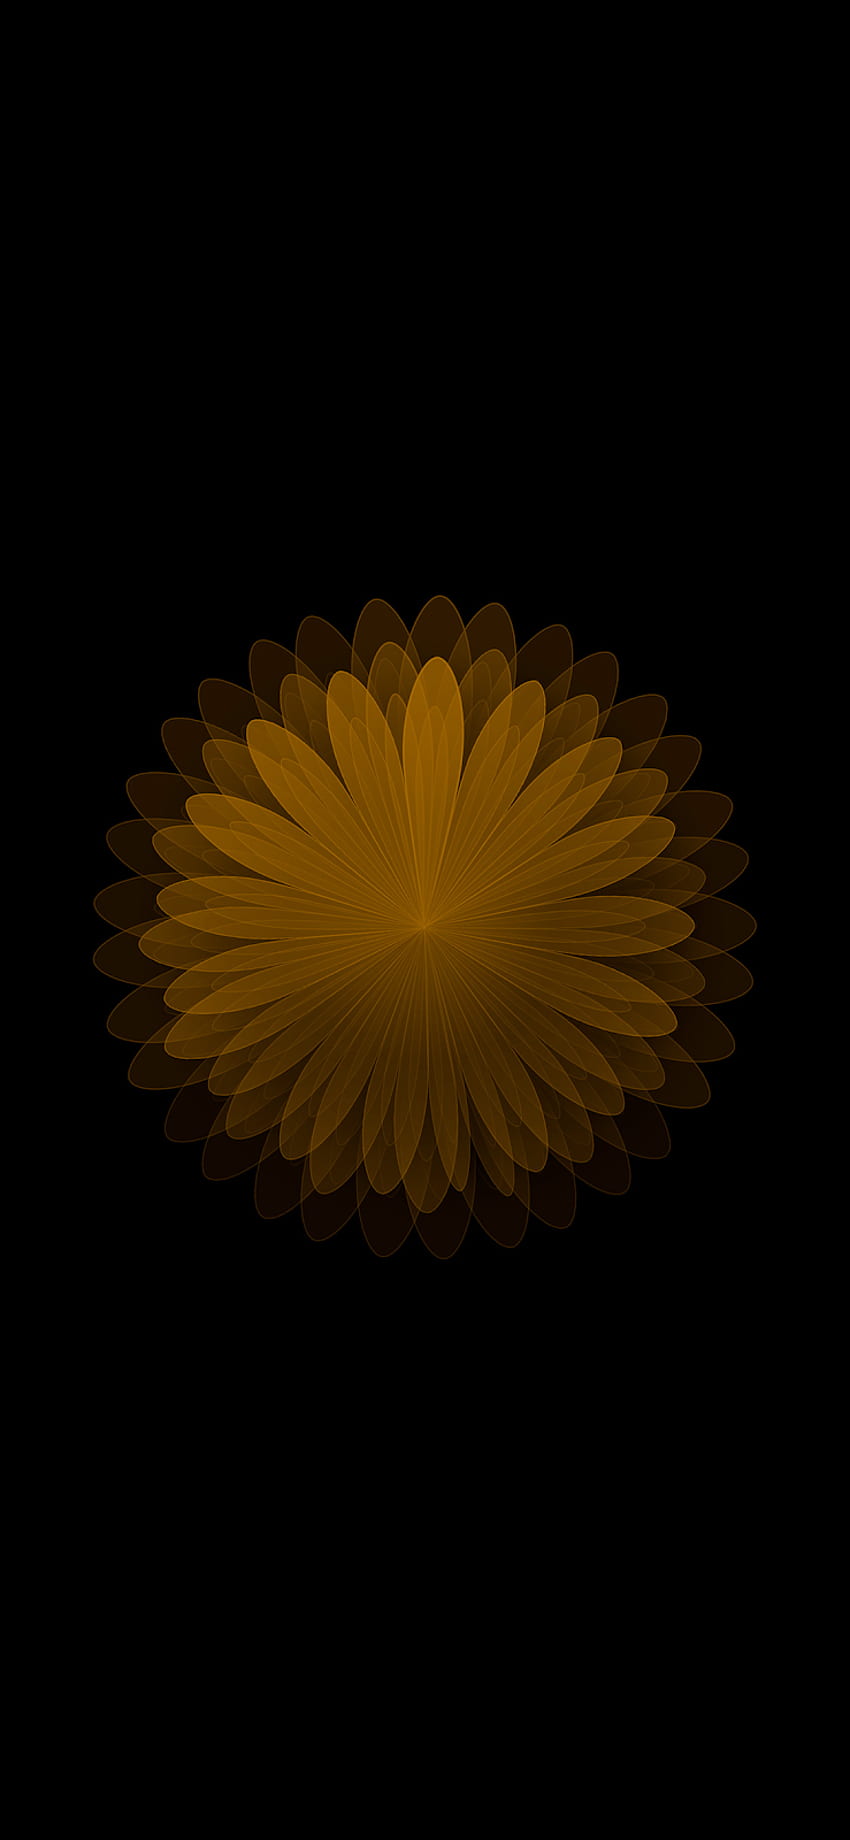 Manzana de Roman: iPhone X AMOLED flor de color negro fondo de pantalla del teléfono